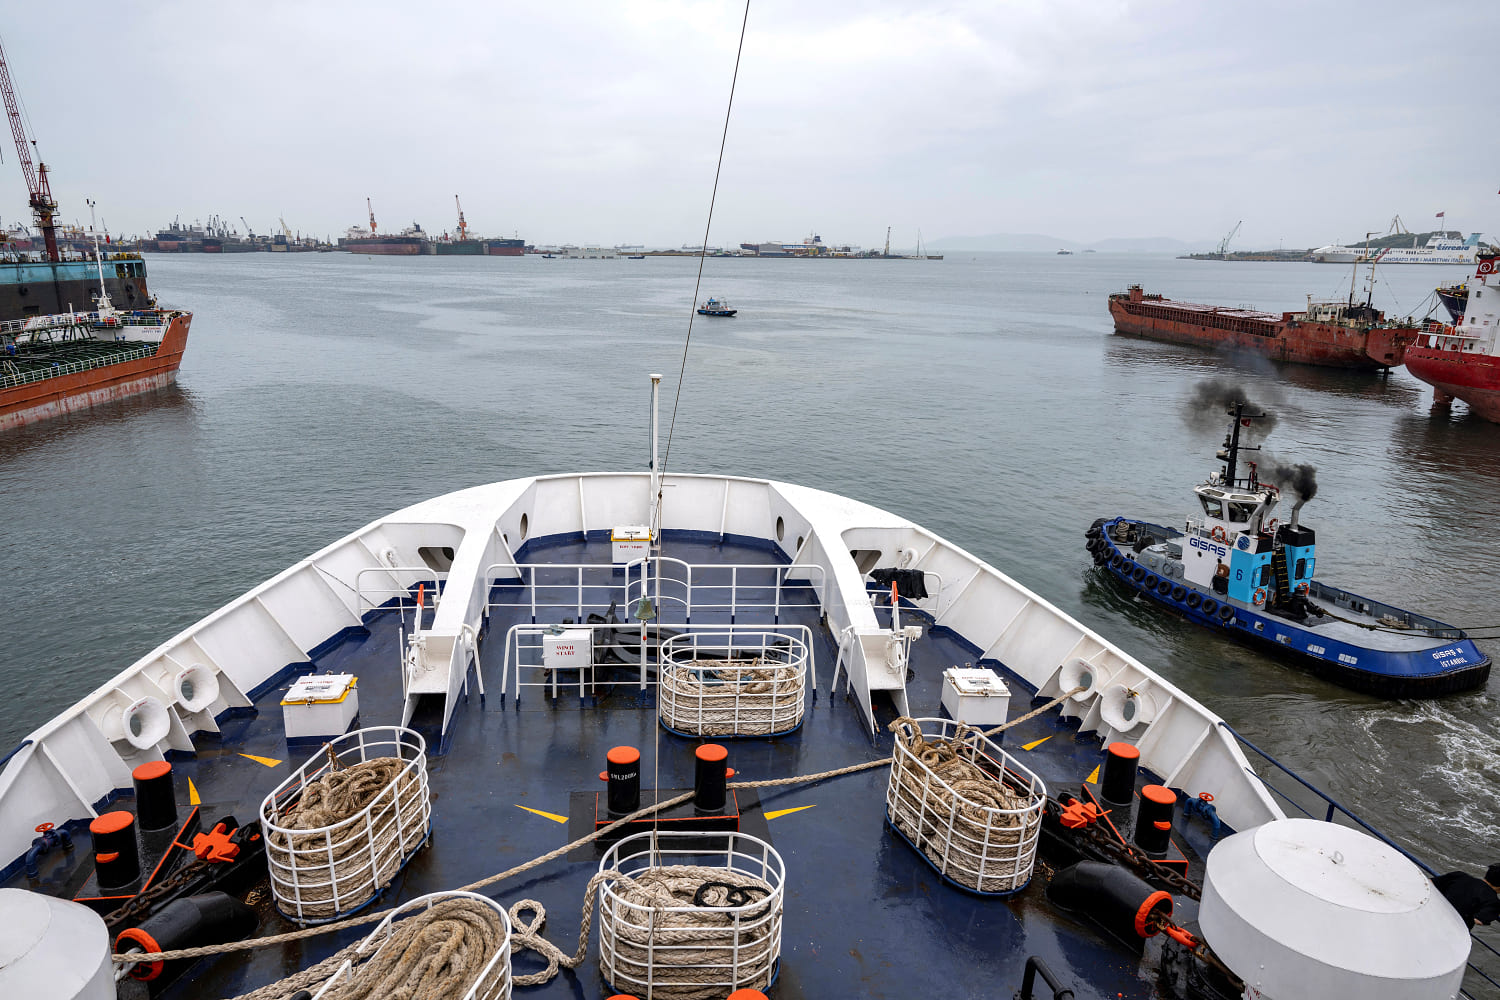 Gaza aid flotilla halted after vessels' flag removed, activists say